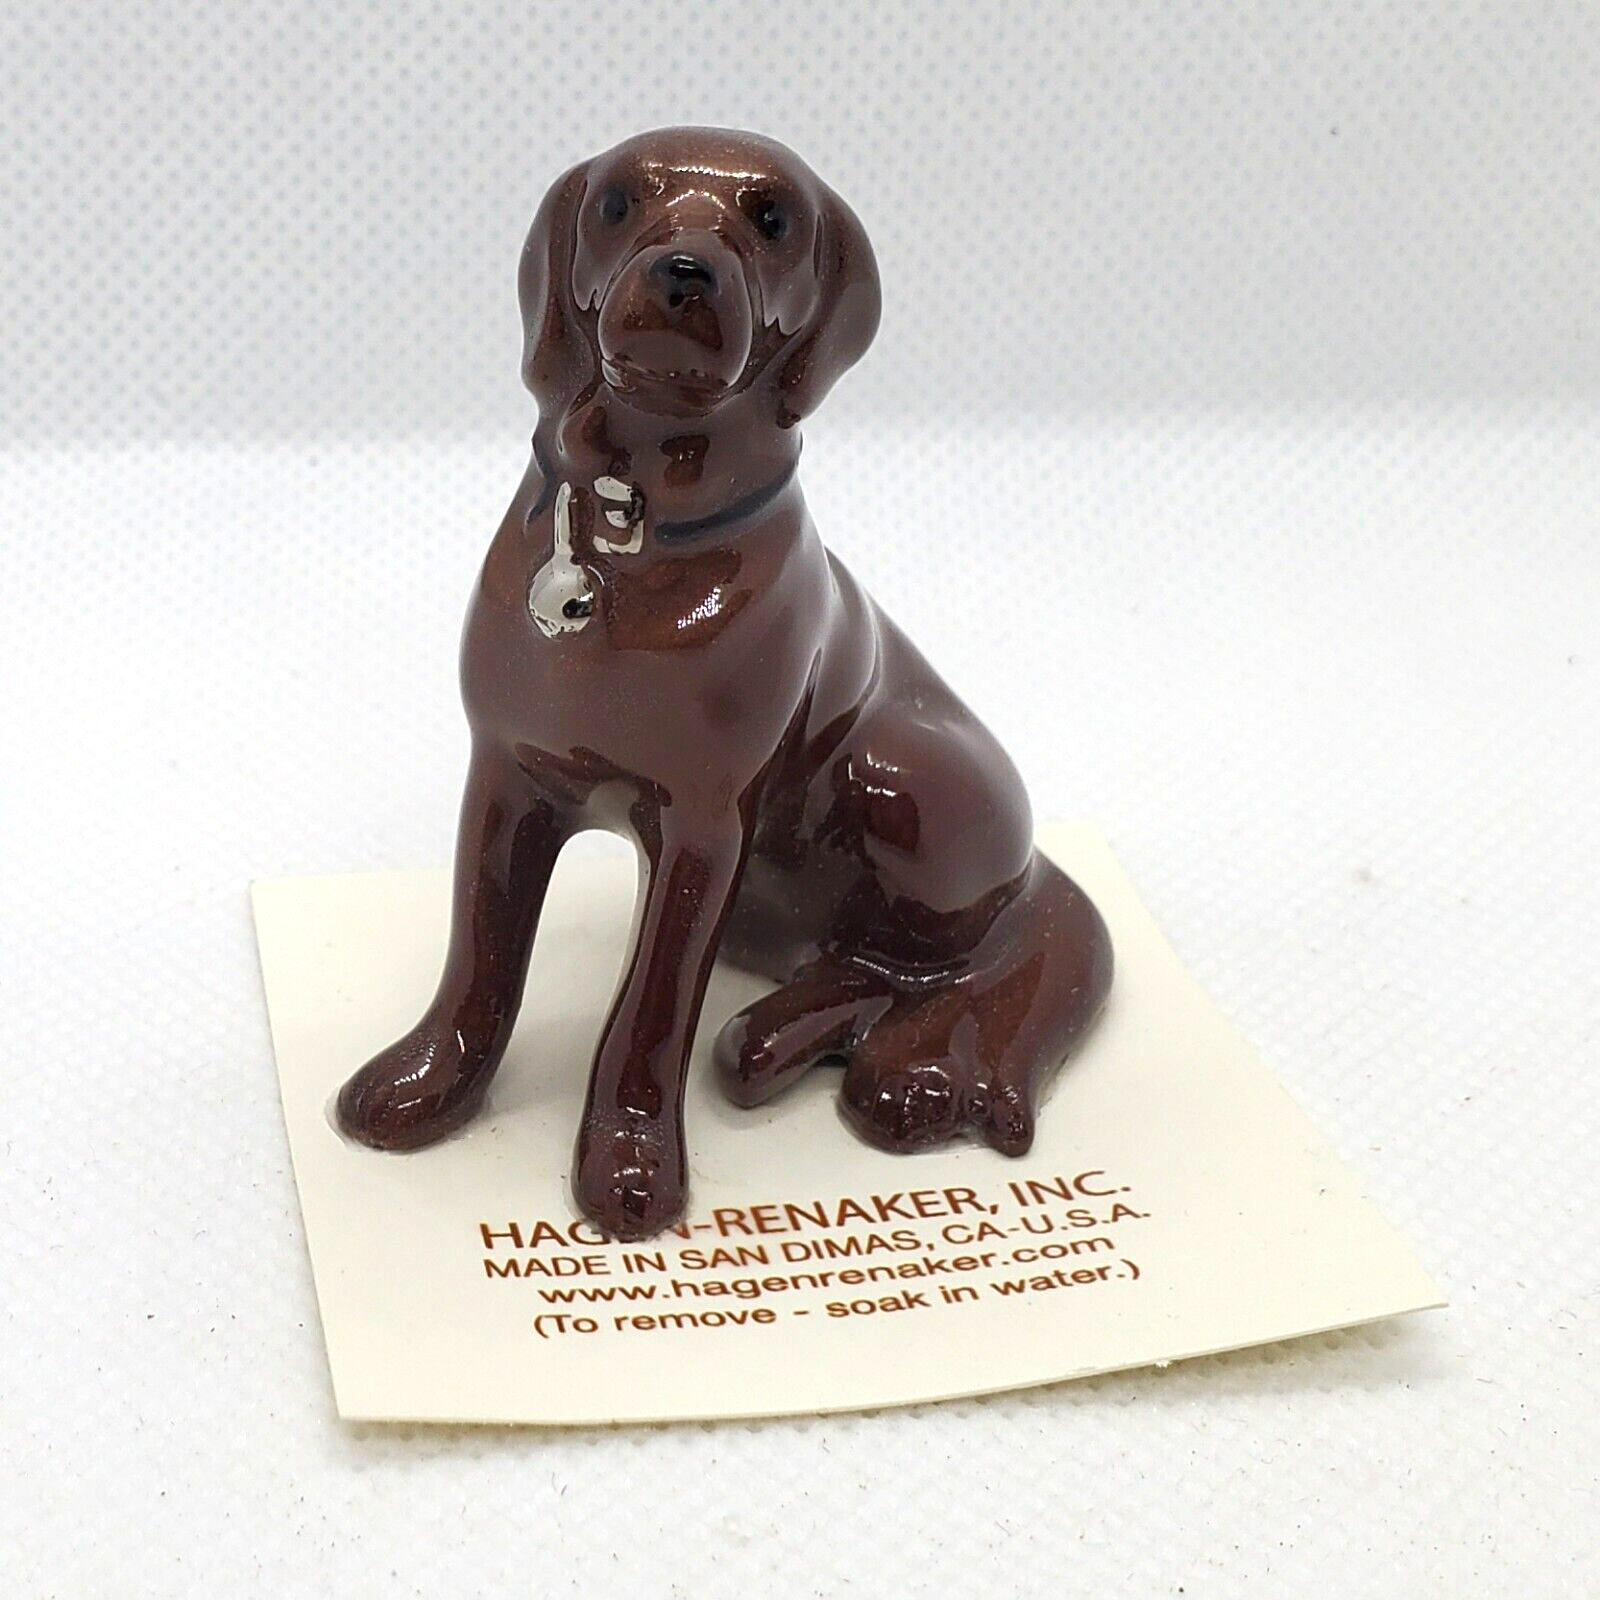 Hagen Renaker Chocolate labrador retriever dog figurine 2in tall NEW 